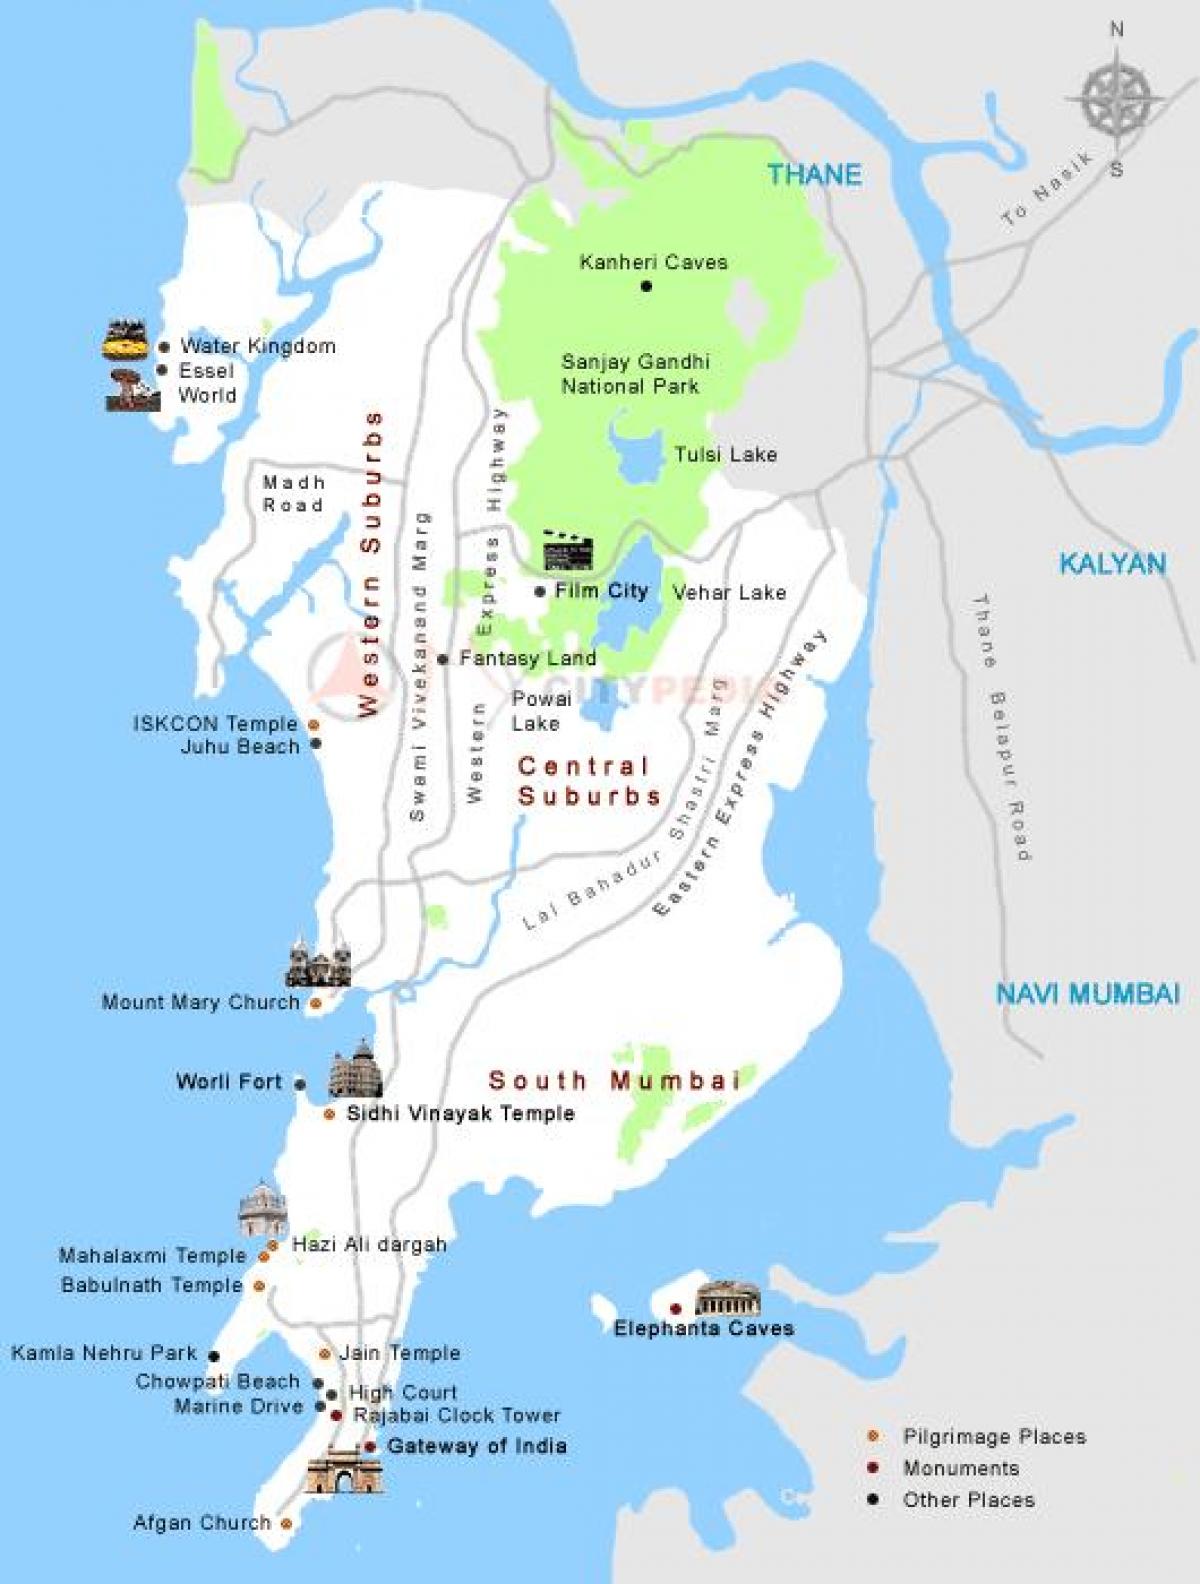 Даршан mumbai се намира на картата